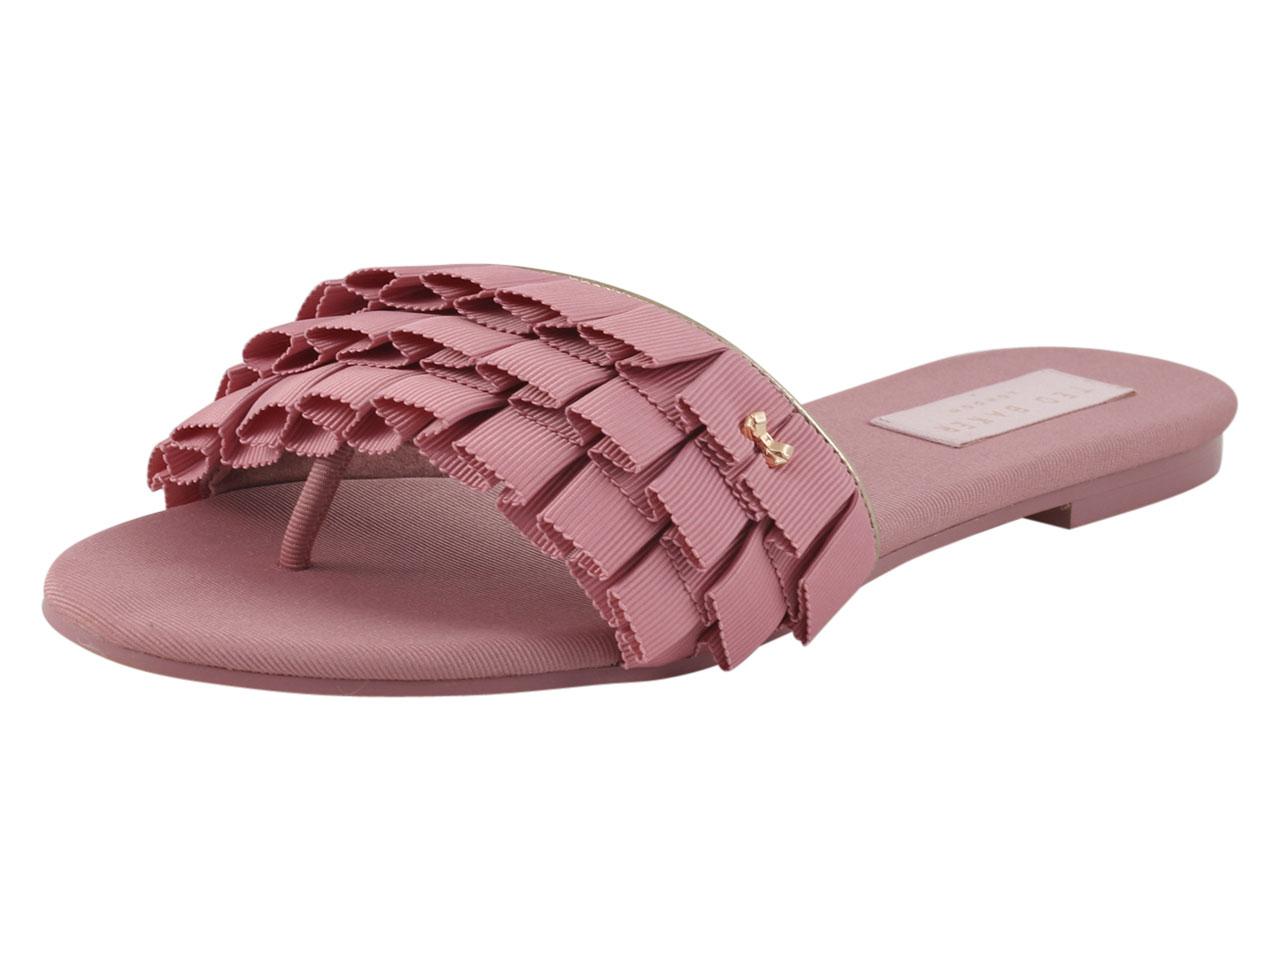 Ted Baker Women's Towdi Slide Sandals Shoes - Pink - 8 B(M) US